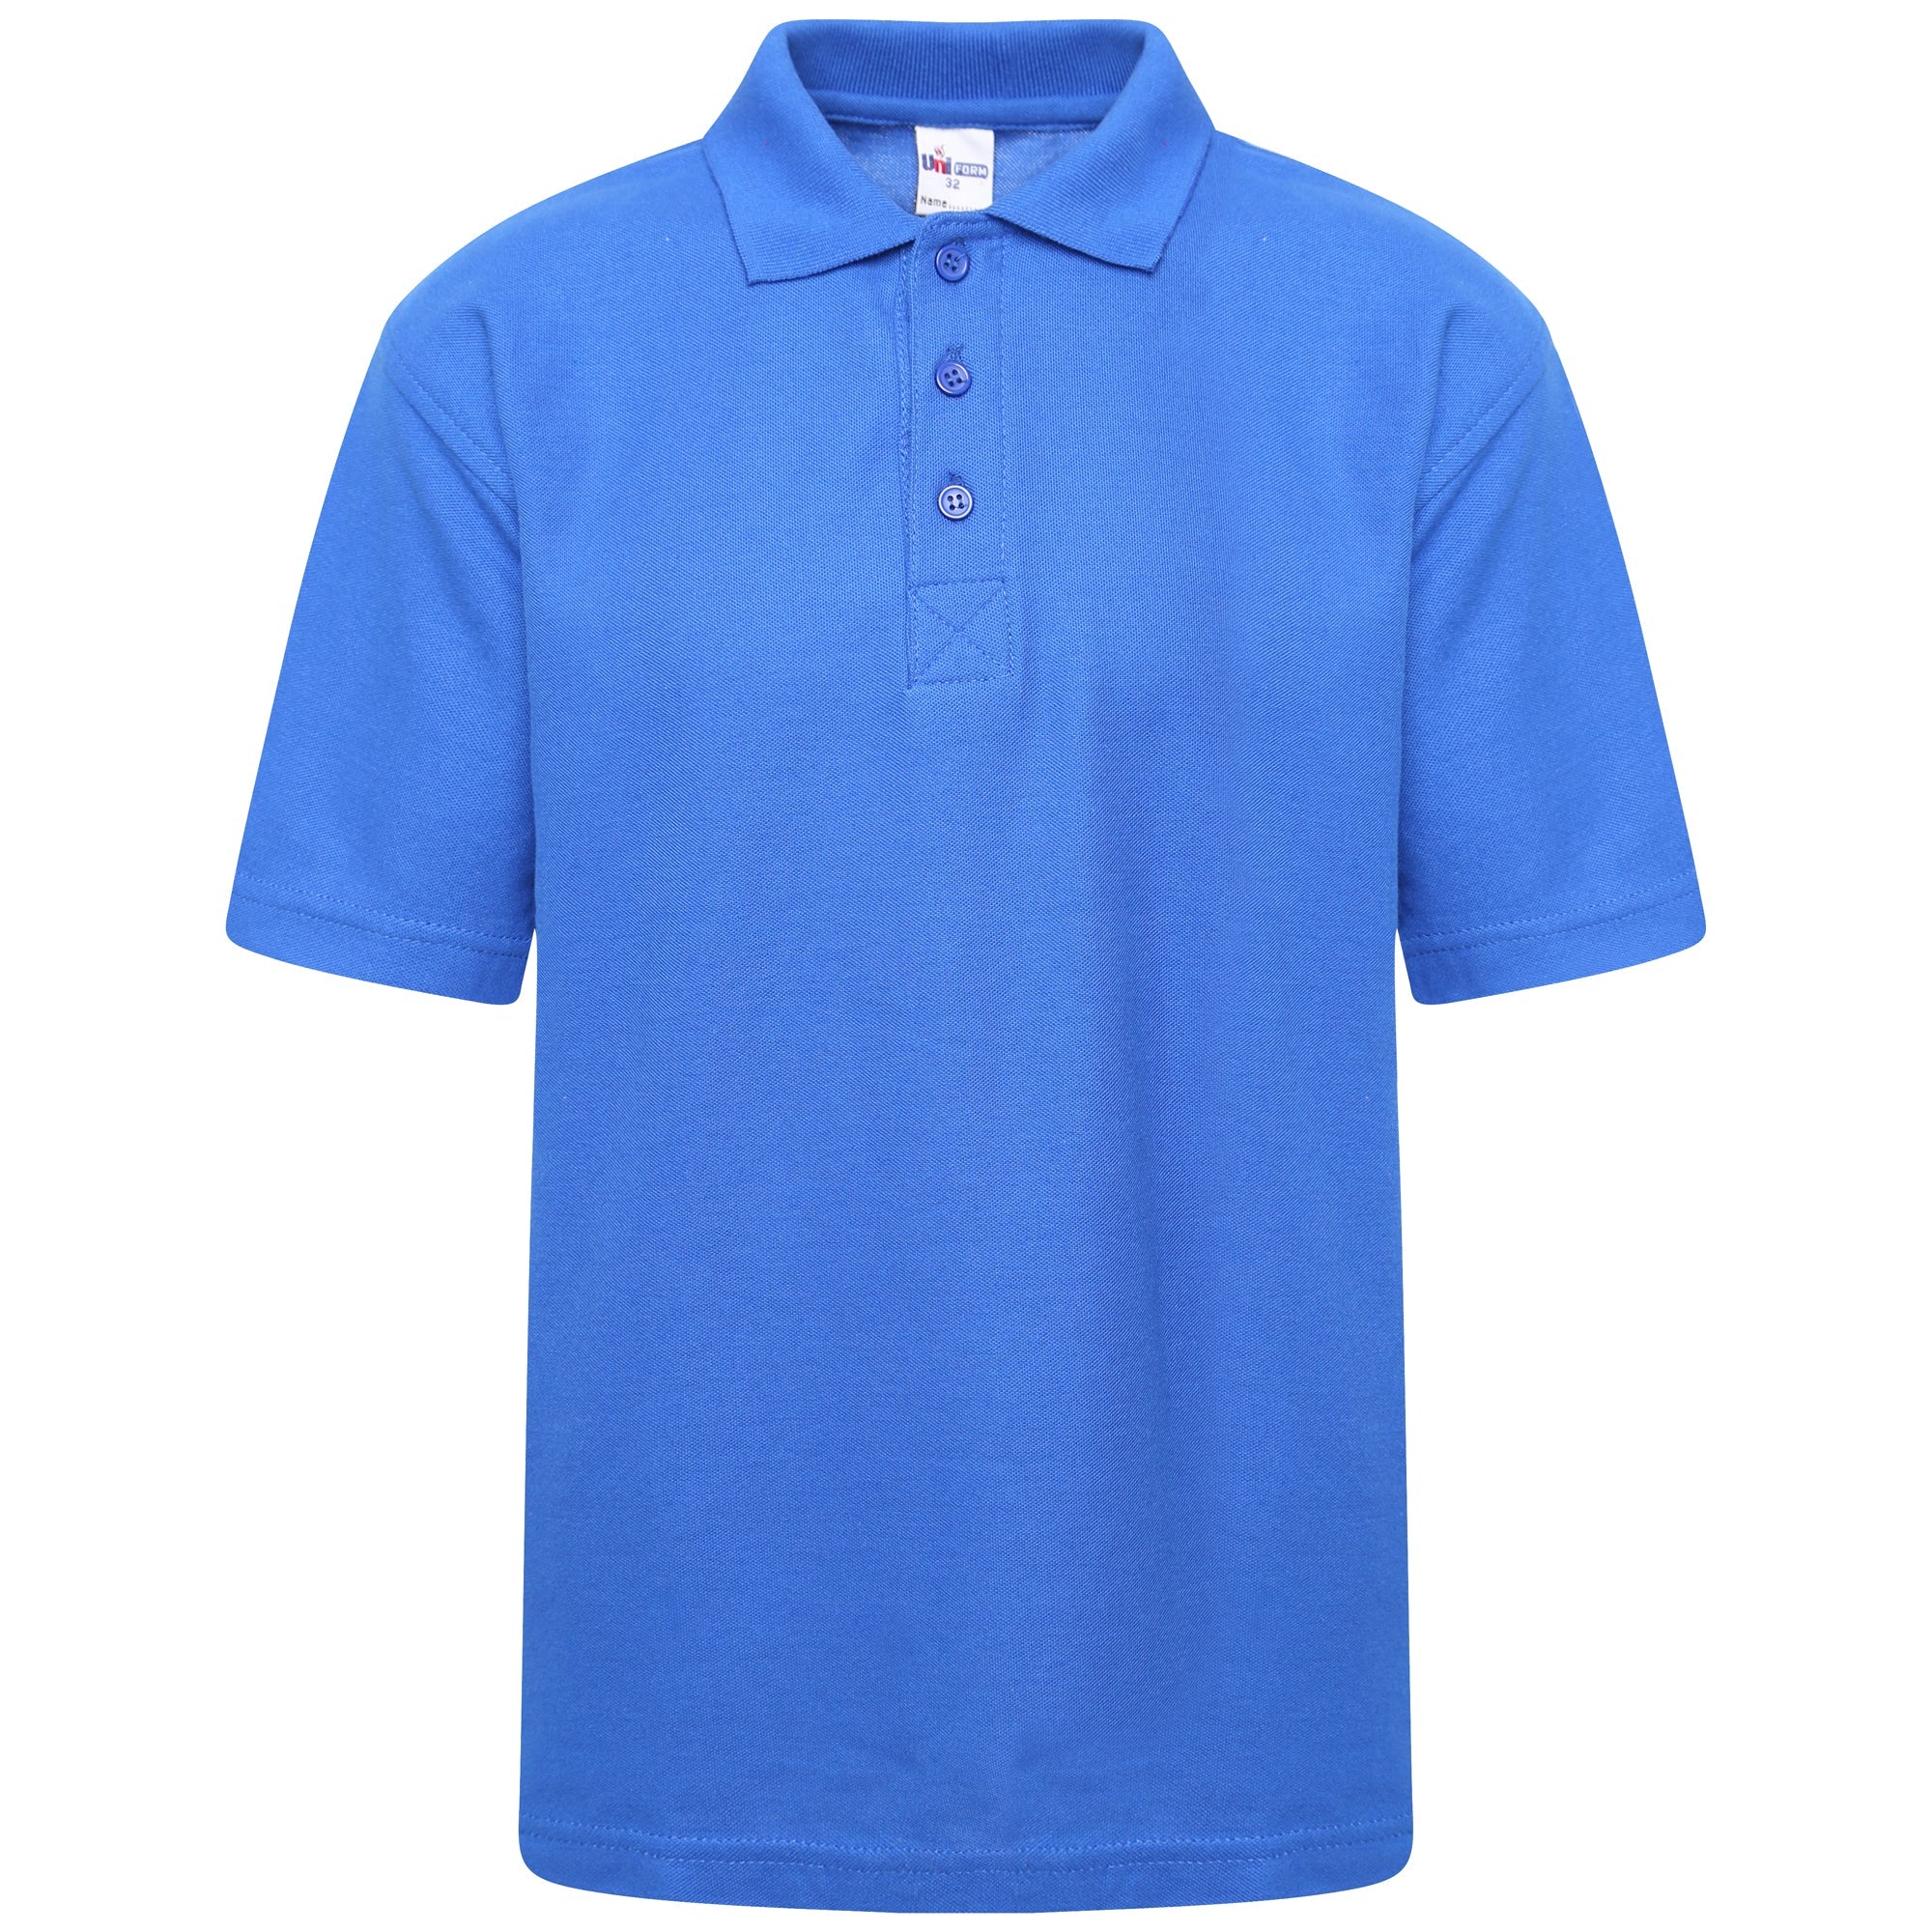 Royal Blue Polo T Shirts School Uniform Unisex Kids Polo Shirts Plain Polo T Shirt Boys Girls